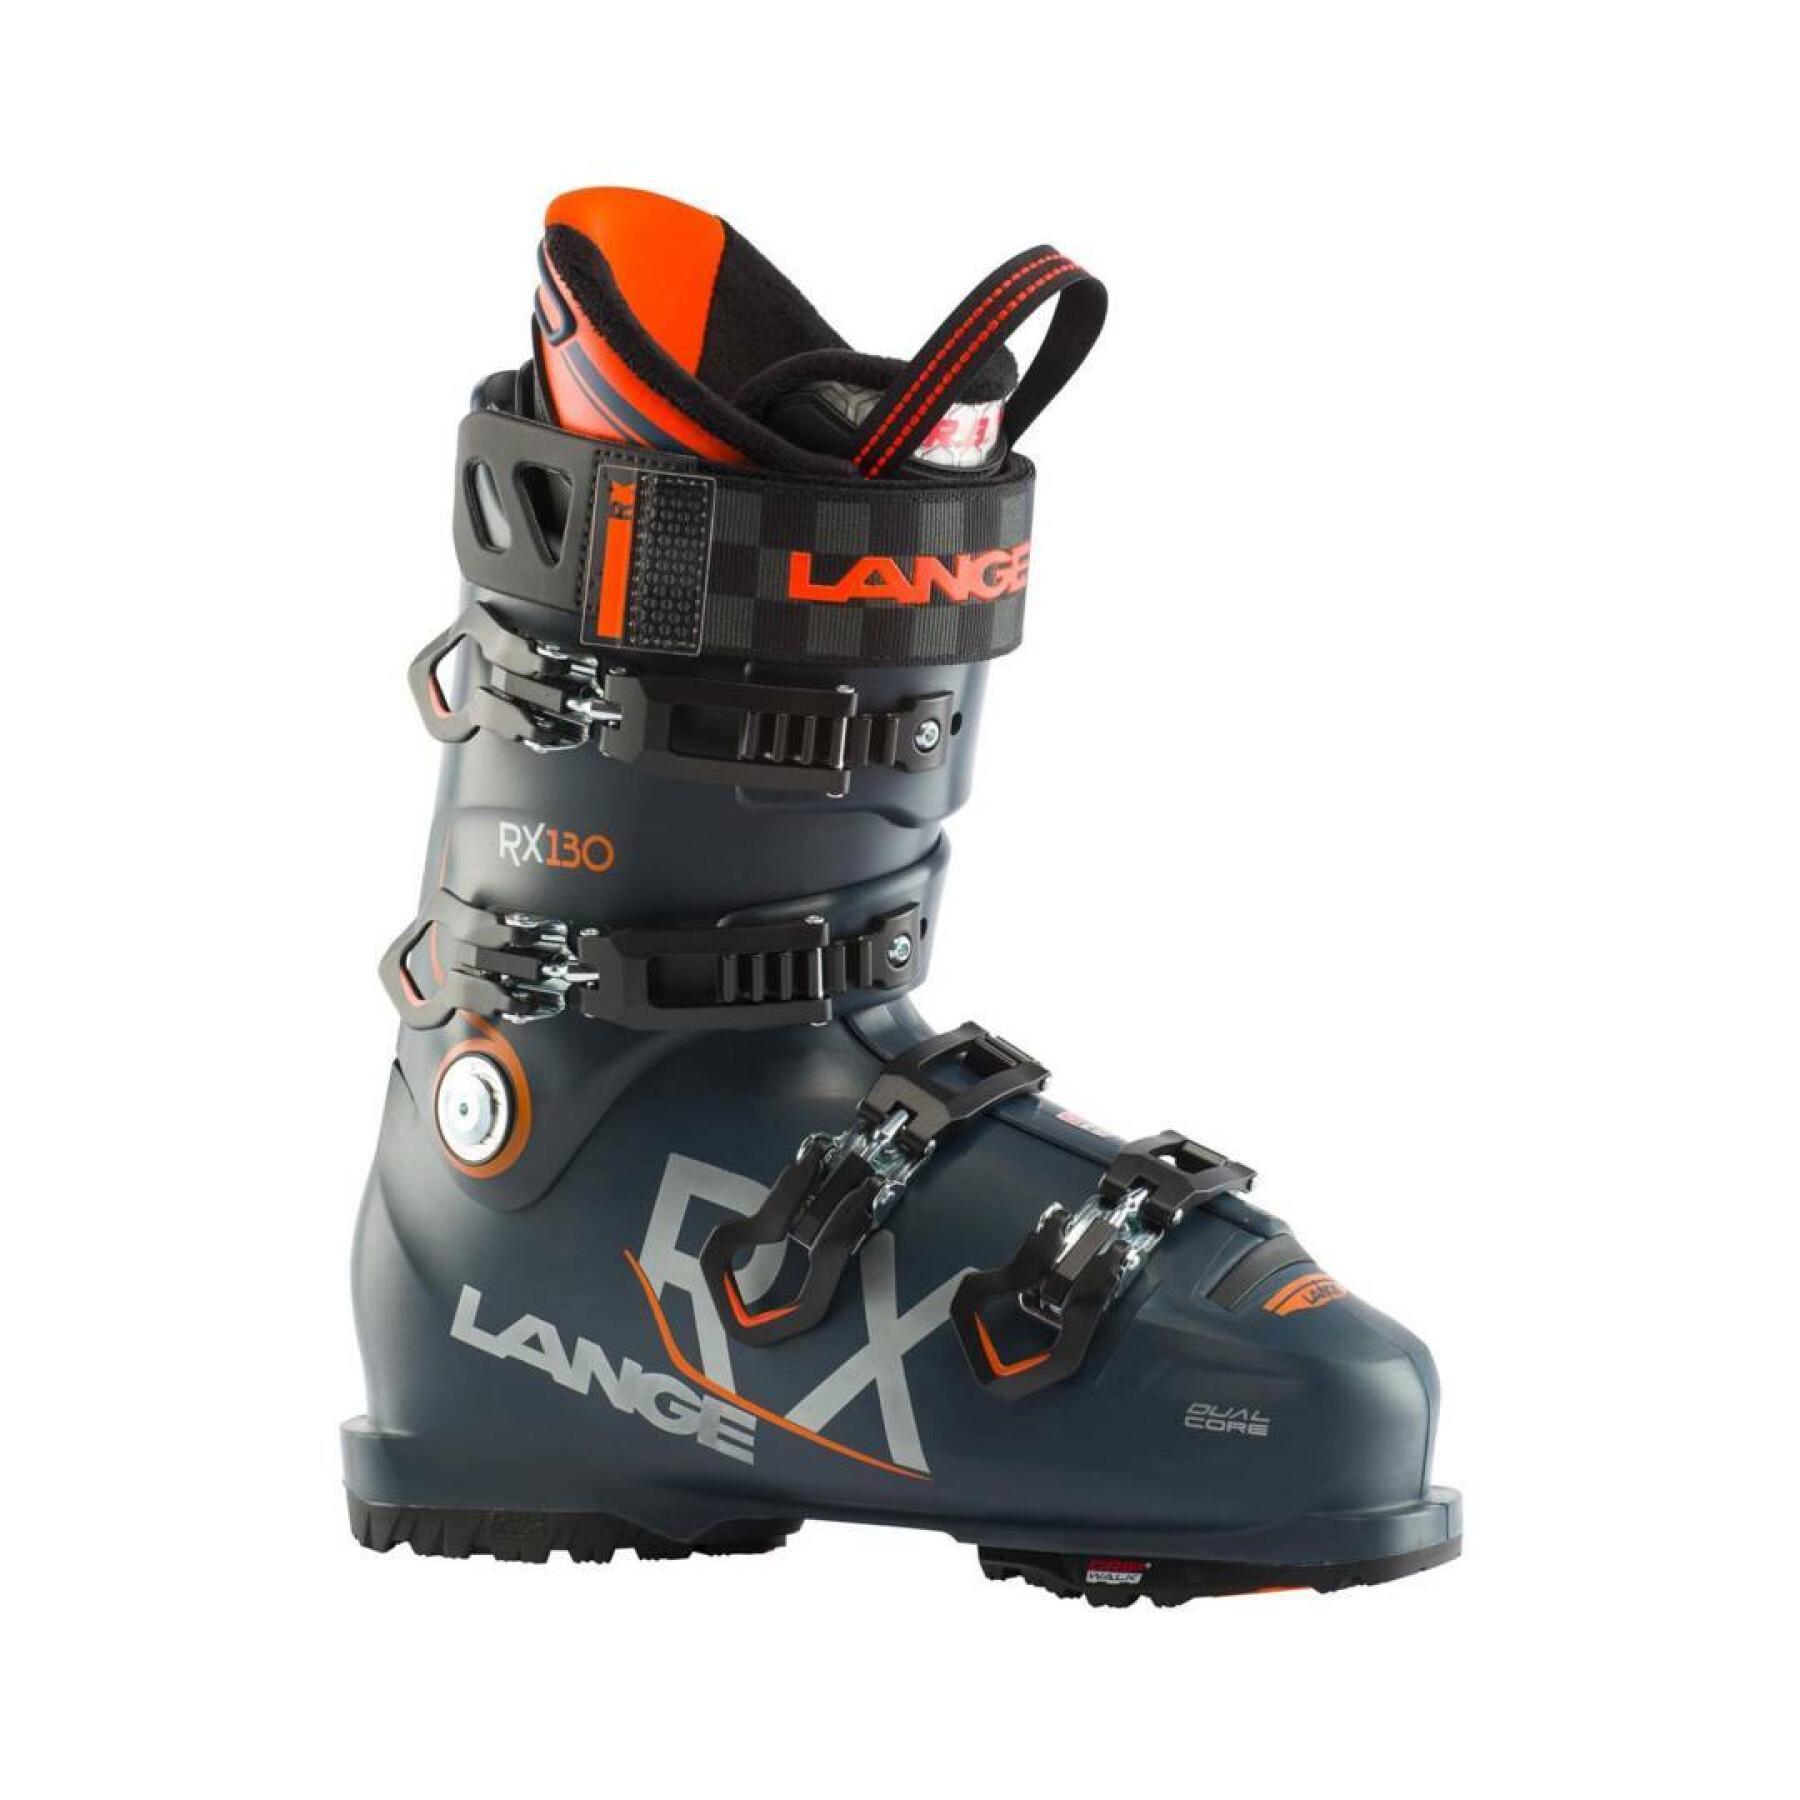 Ski boots Lange RX 130 GW